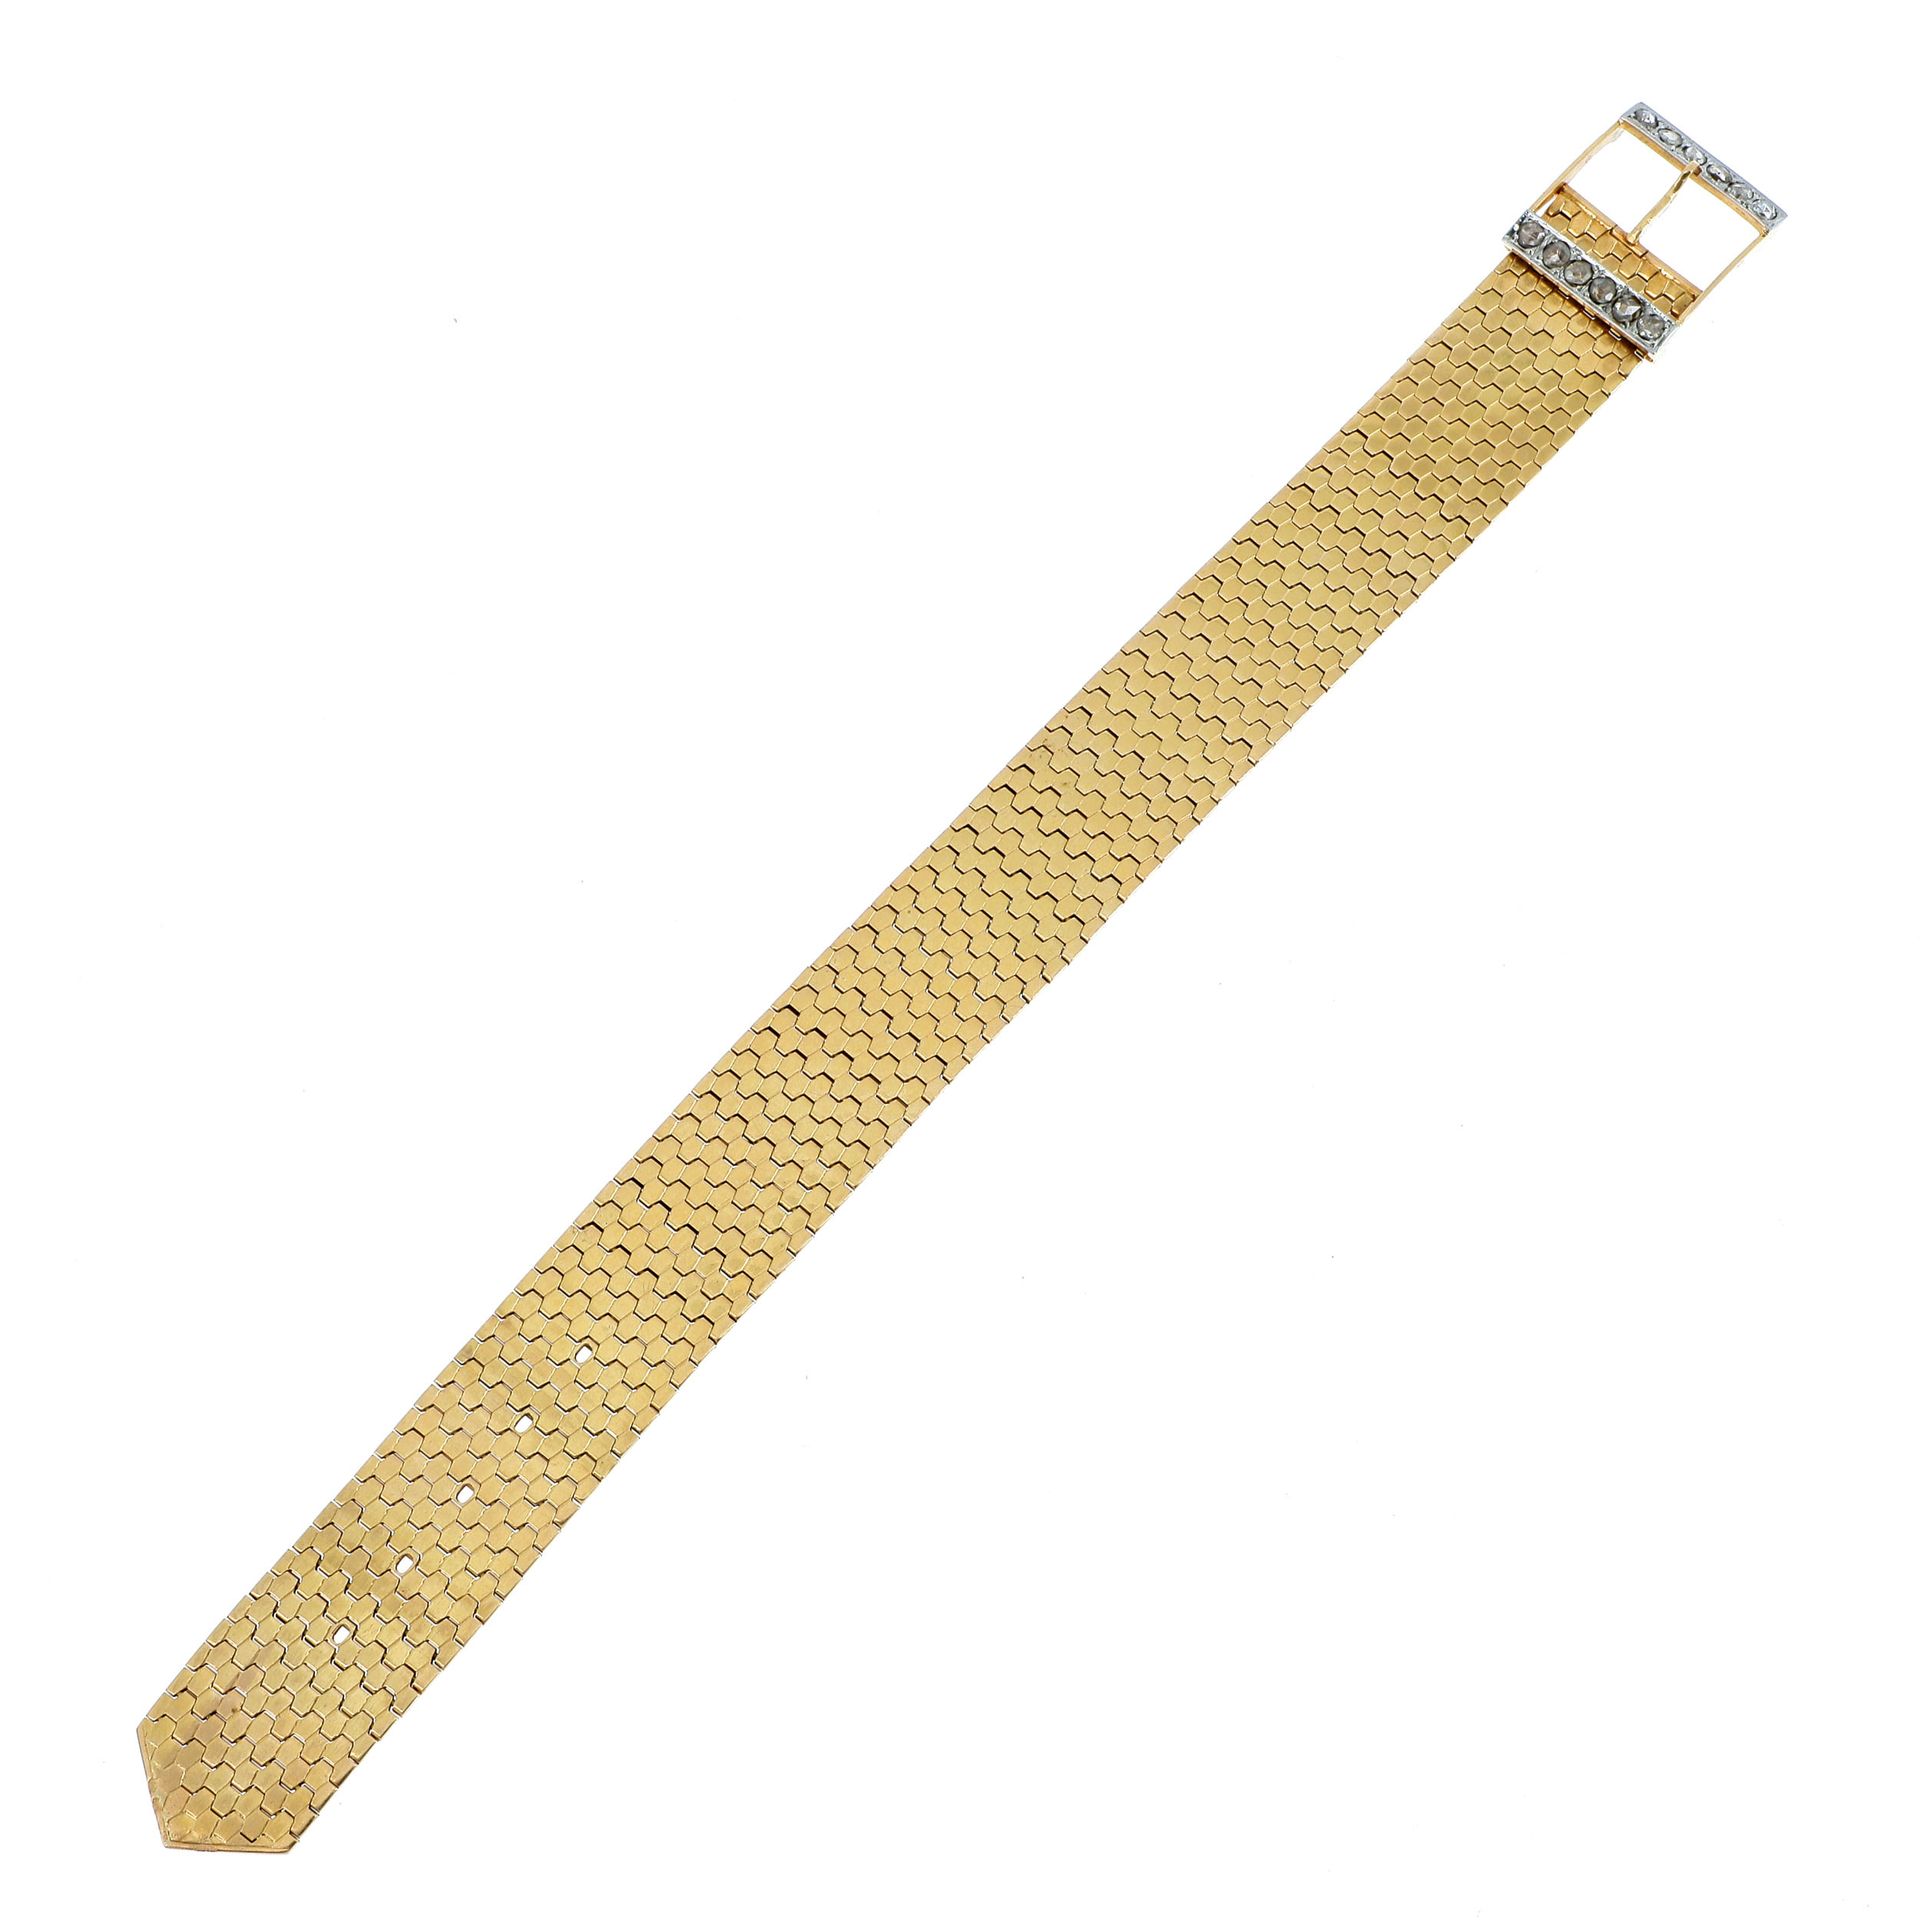 Null 腰带手镯

黄金材质，扣子上有钻石表层装饰。

重量：34.6克（18K - 750）。

一条钻石和18K金手镯。